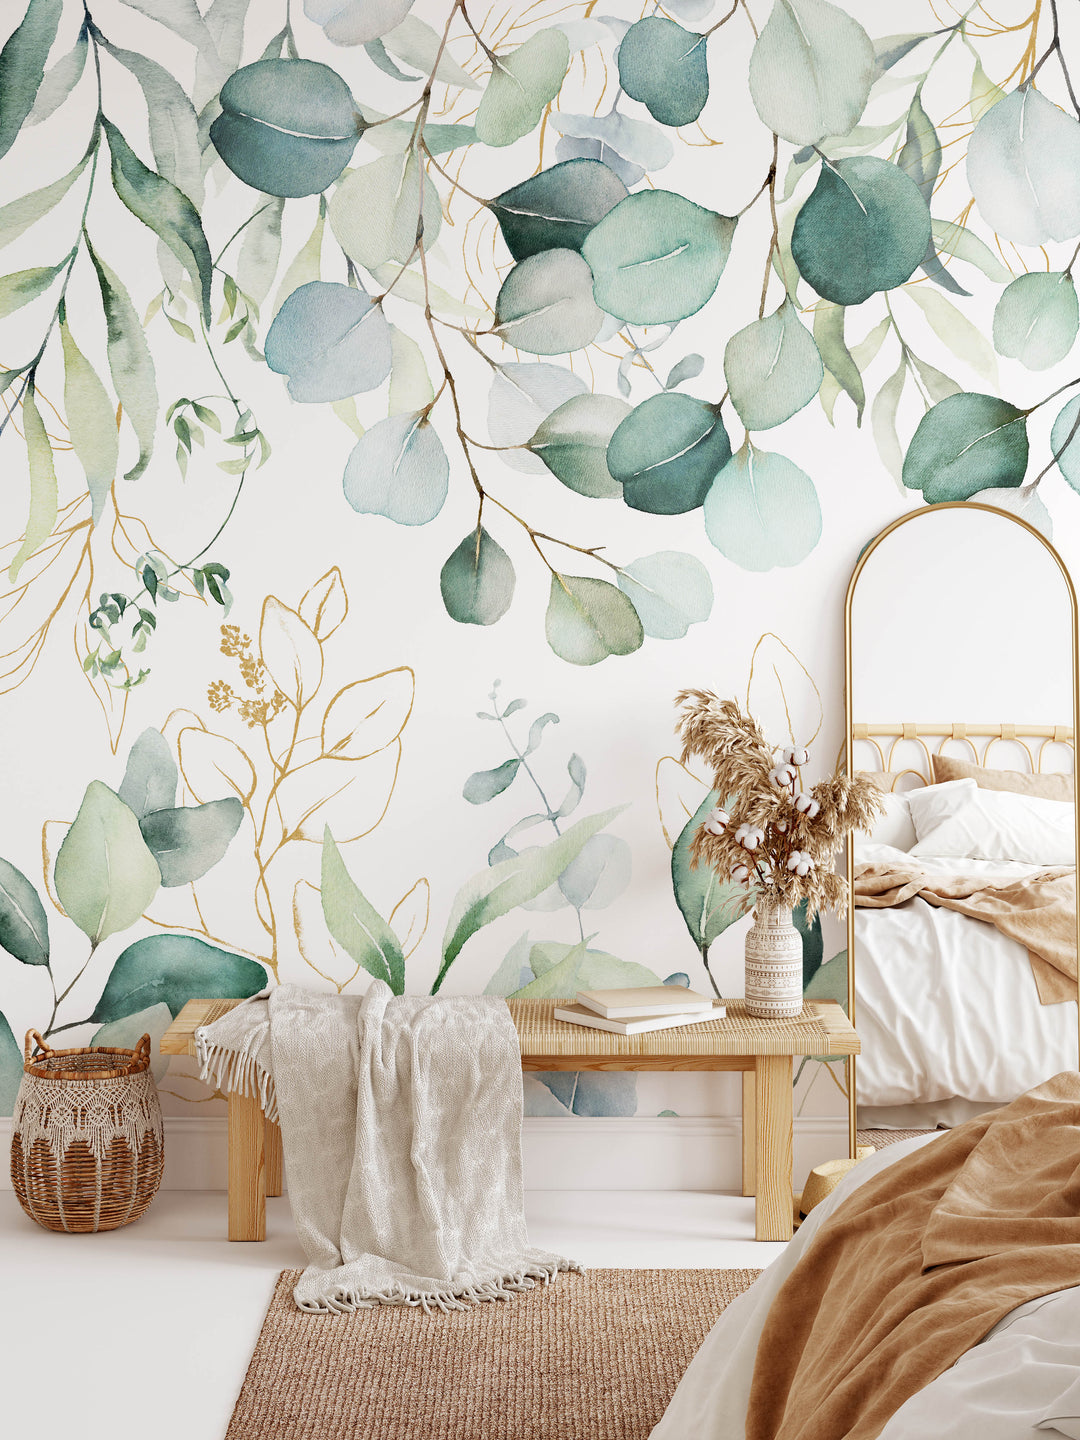 Kristy - Eucalyptus Watercolor Leaves Mural